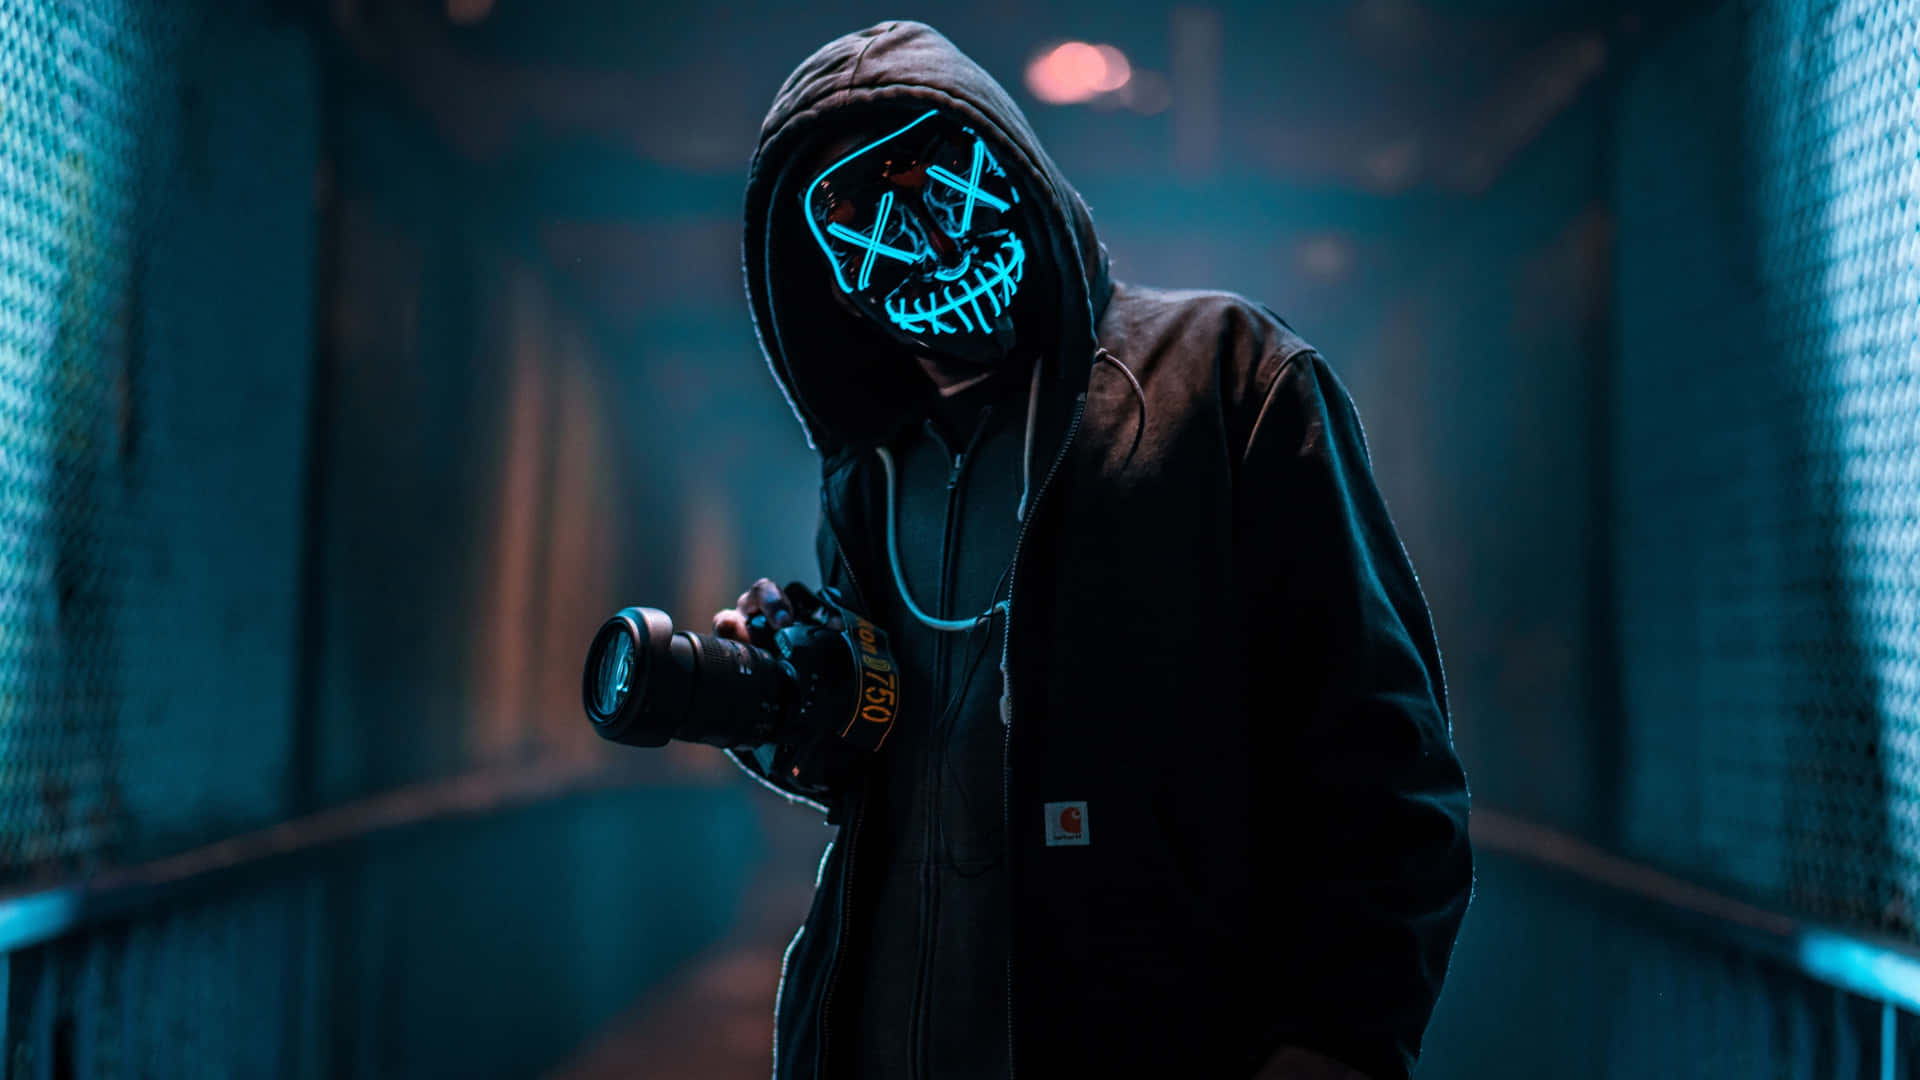 Neon Blue 4k Mask Anonymous Photographer Wallpaper